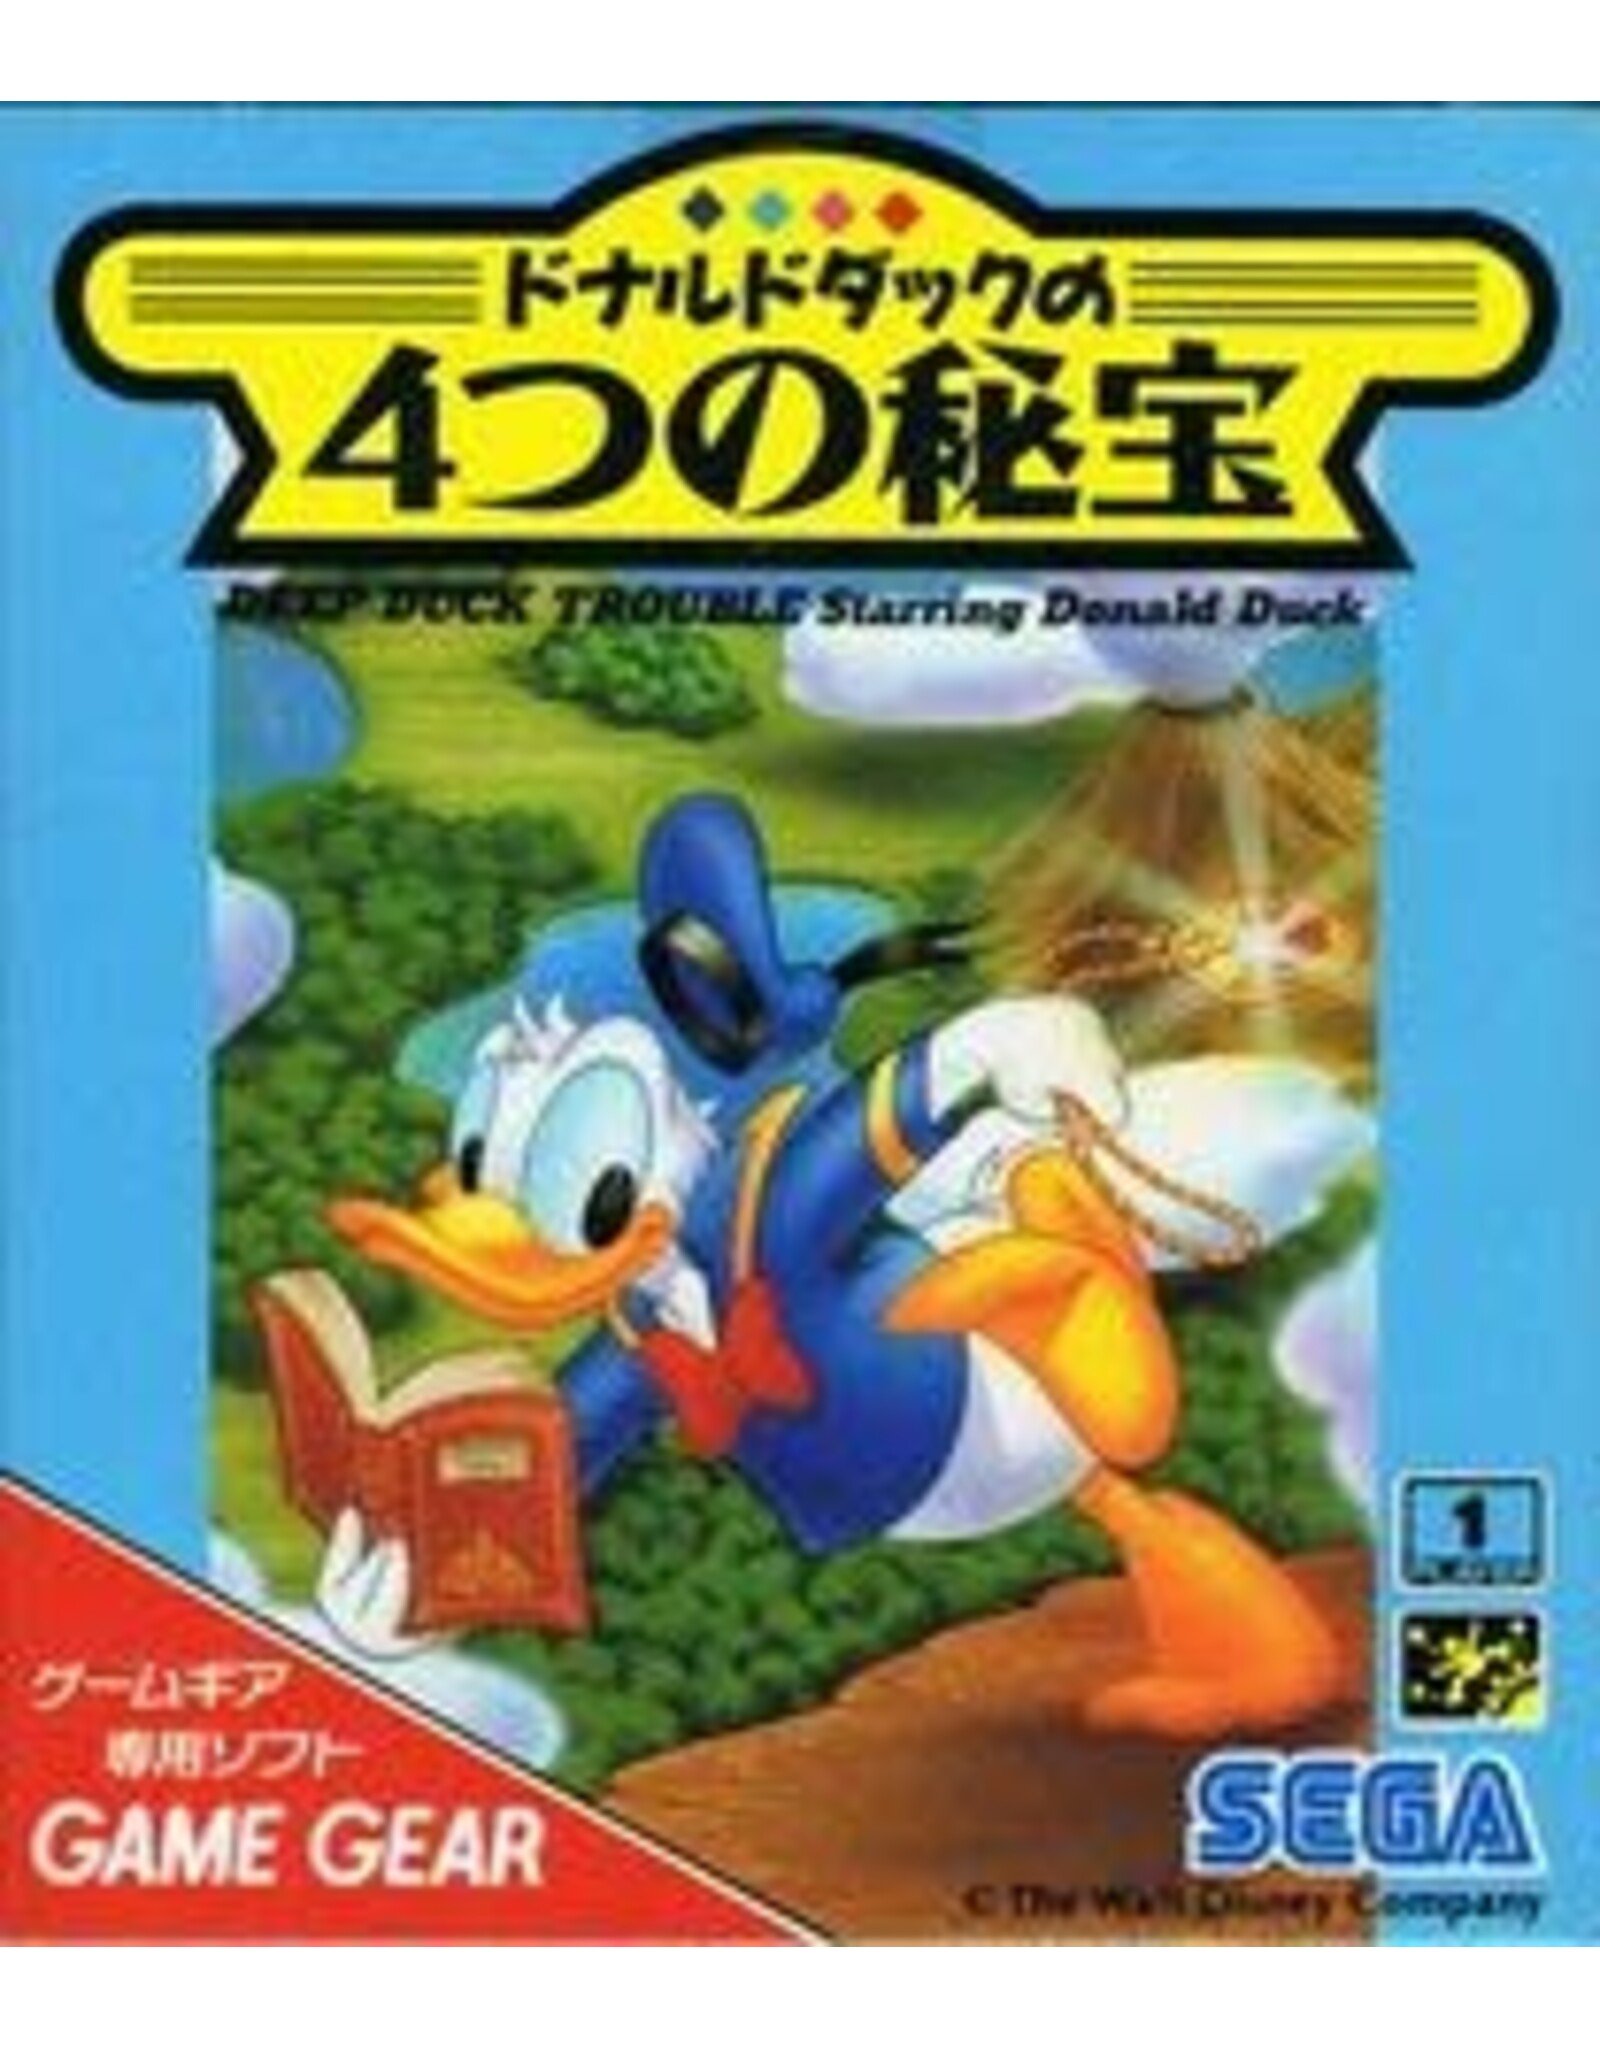 Sega Game Gear Deep Duck Trouble Starring Donald Duck (Cart Only, JP Import)